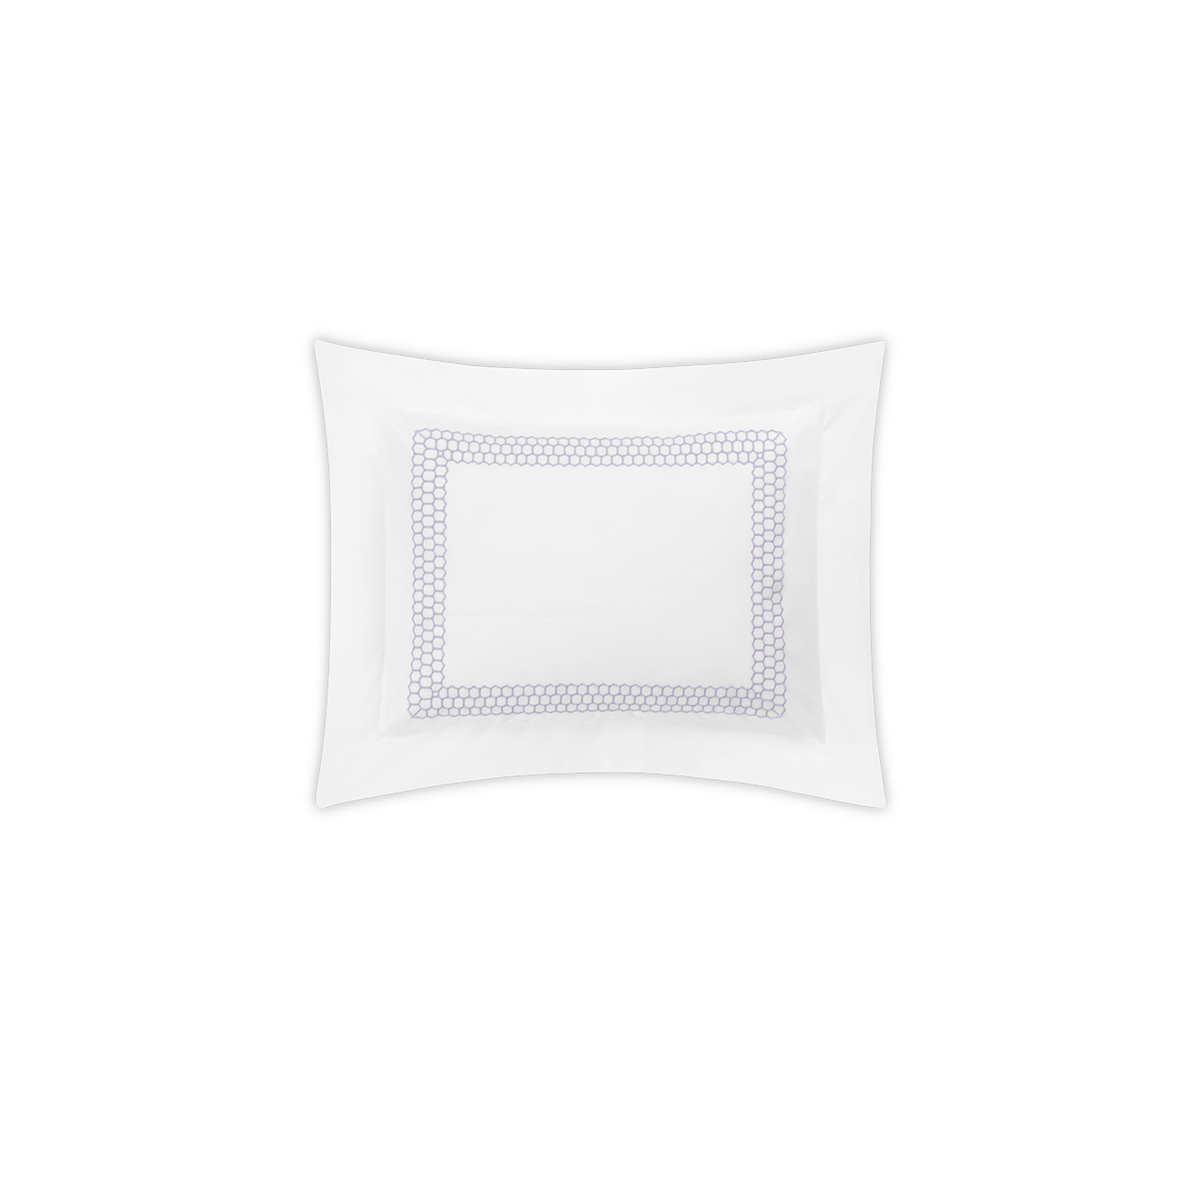 Clear Image of Matouk Liana Bedding Boudoir Sham in Lavender Color